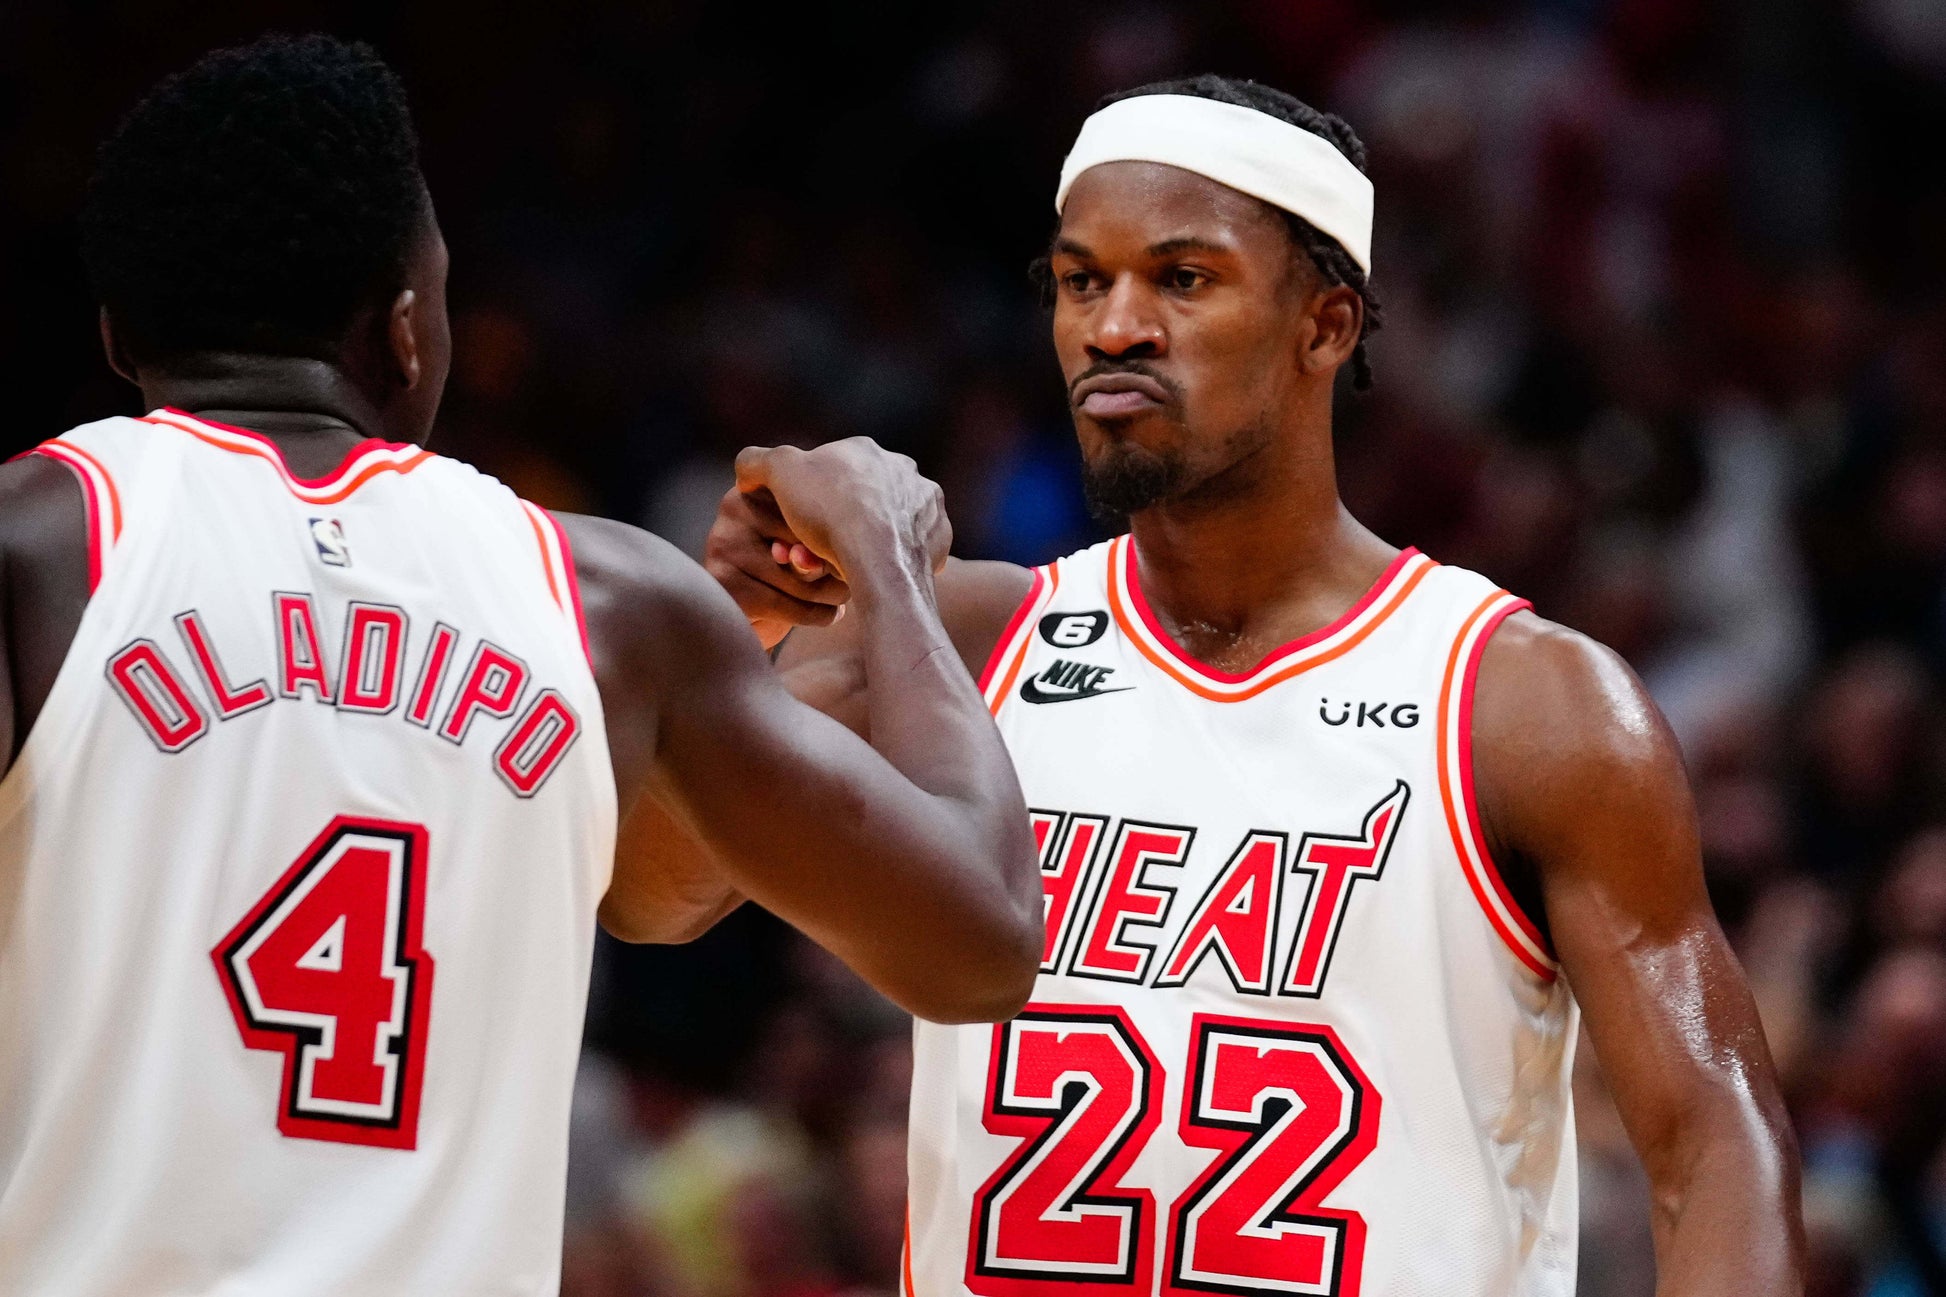 Jimmy Butler Miami Heat #22 Jersey – Nonstop Jersey